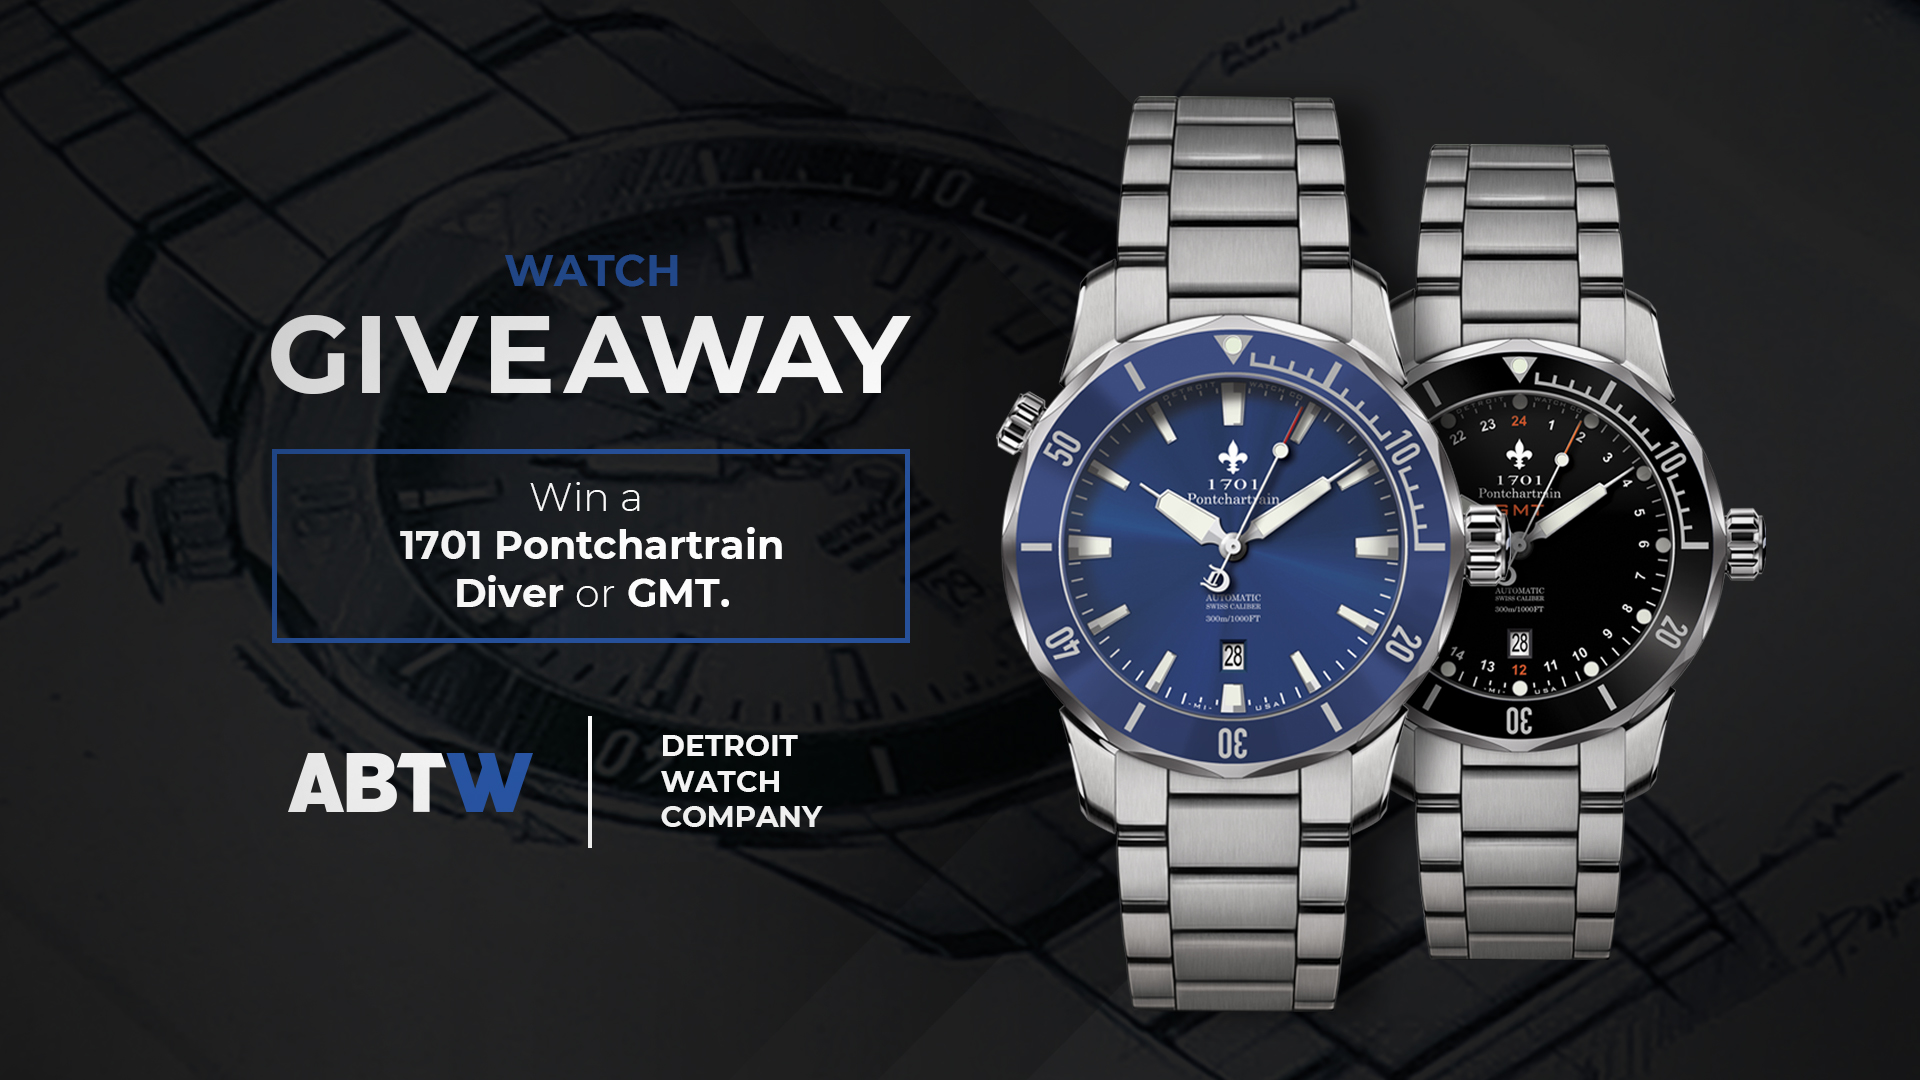 Winner Announced: Detroit Watch Company 1701 Pontchartrain